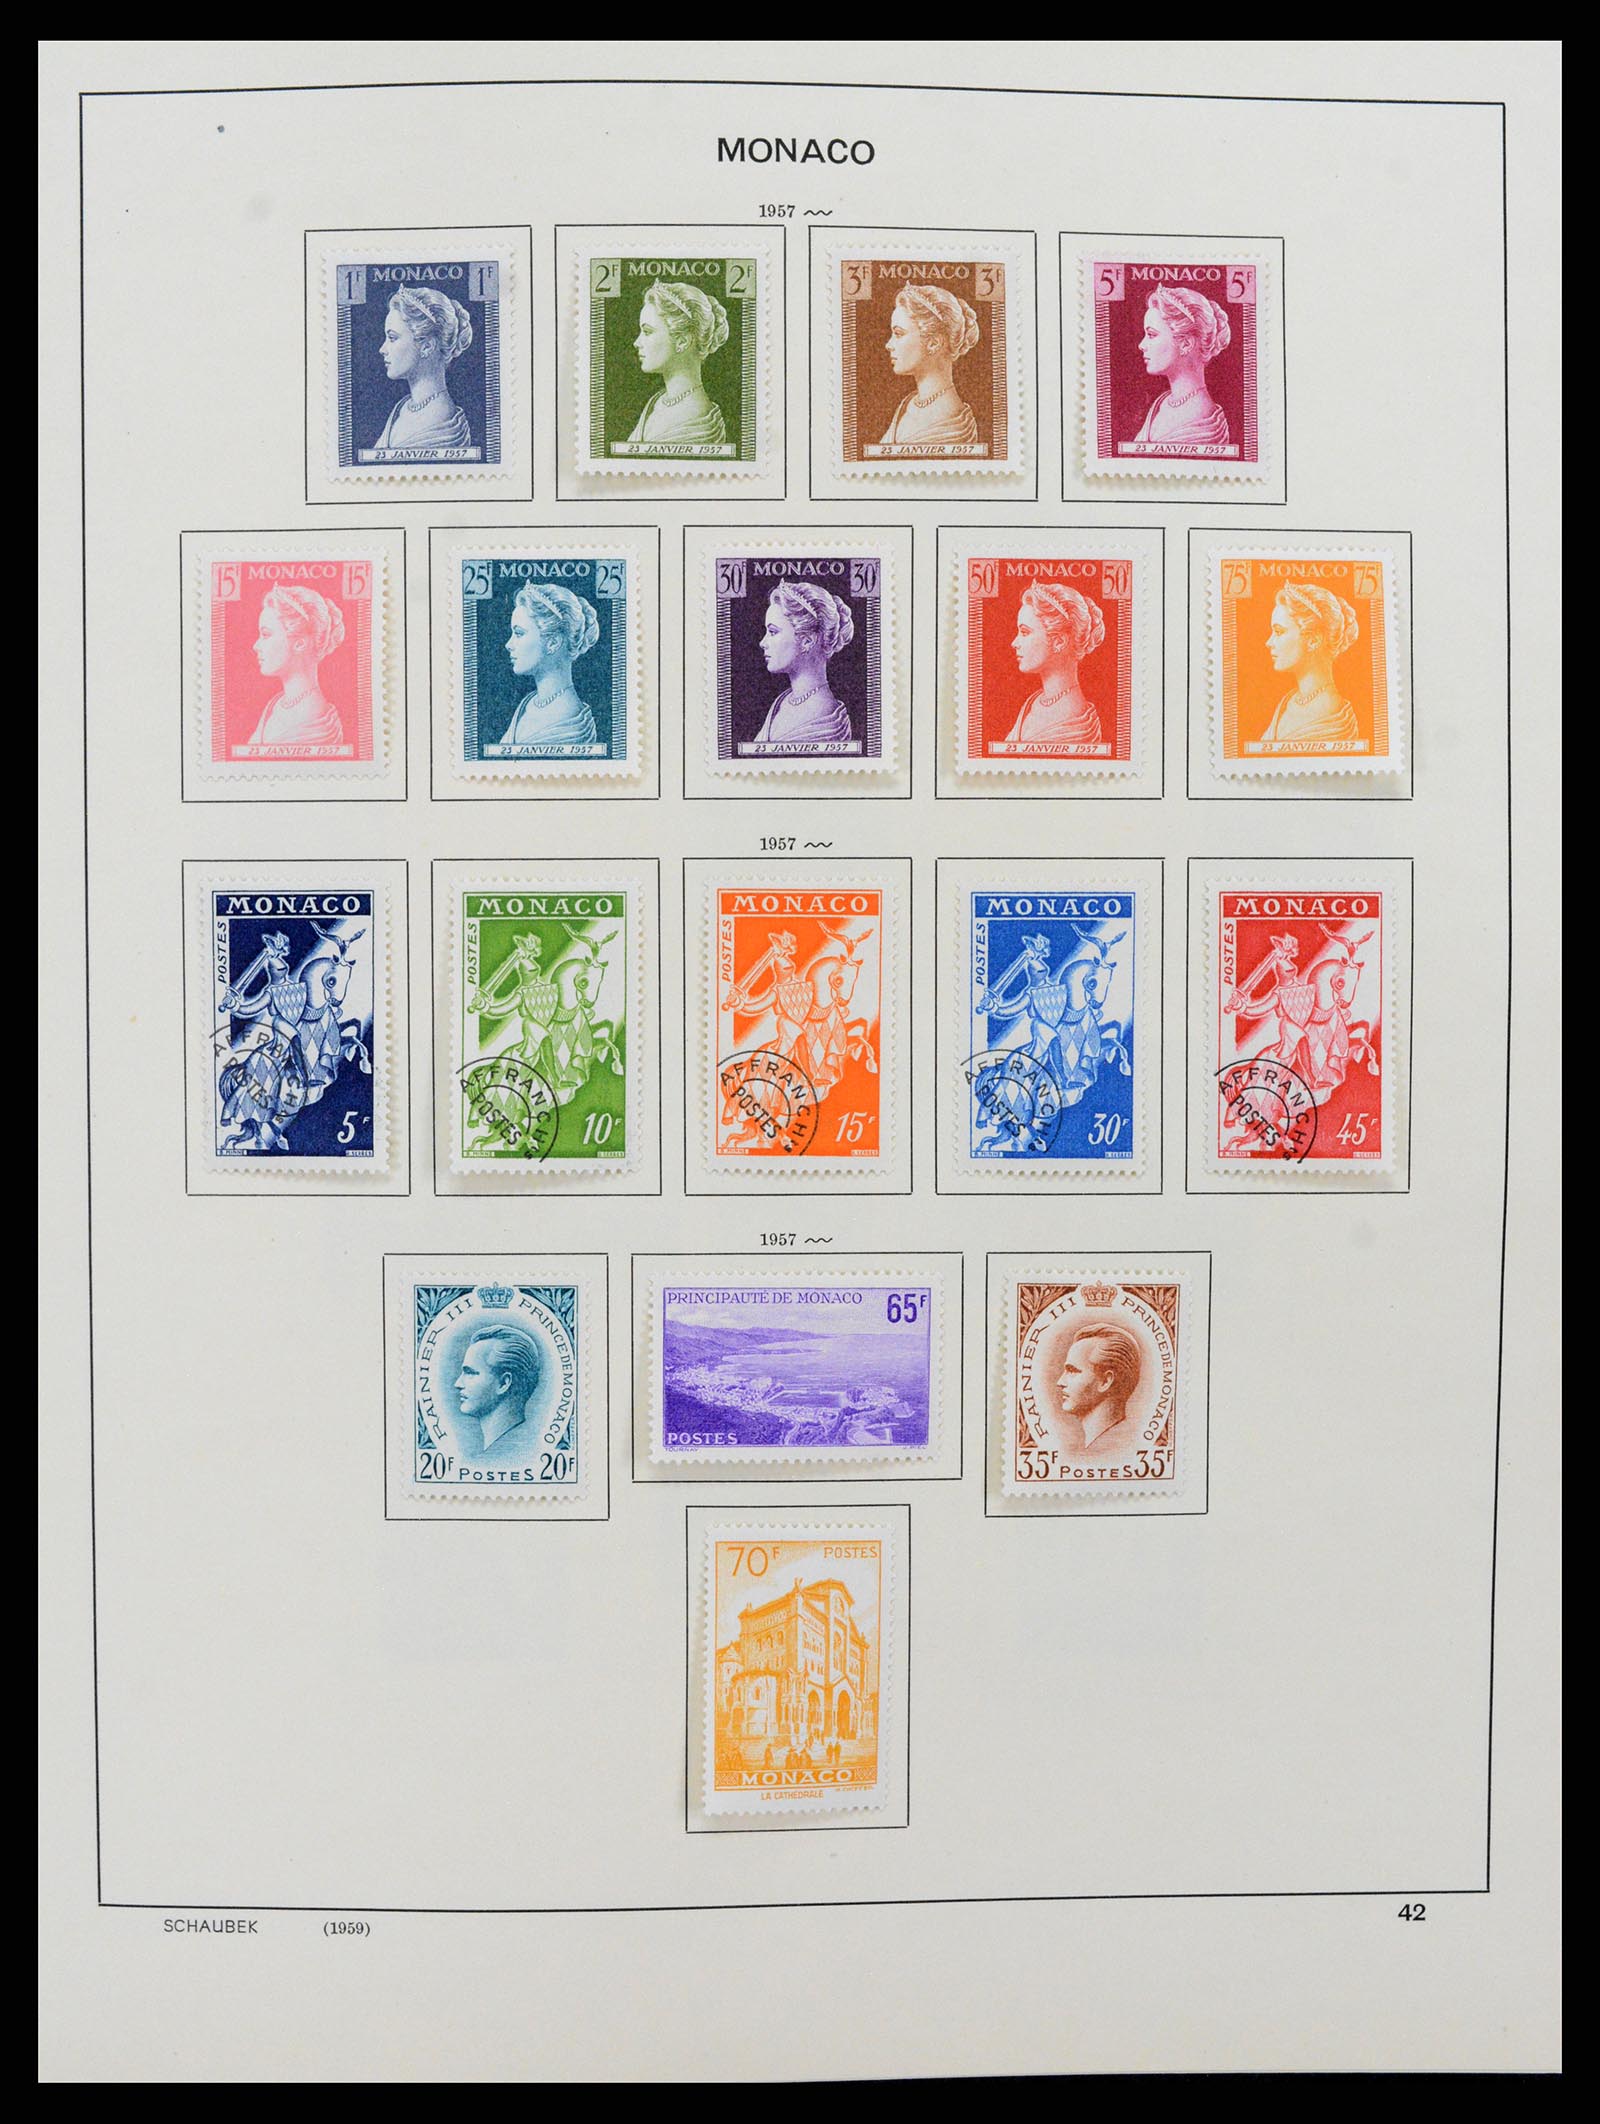 37570 049 - Stamp collection 37570 Monaco 1885-2013.